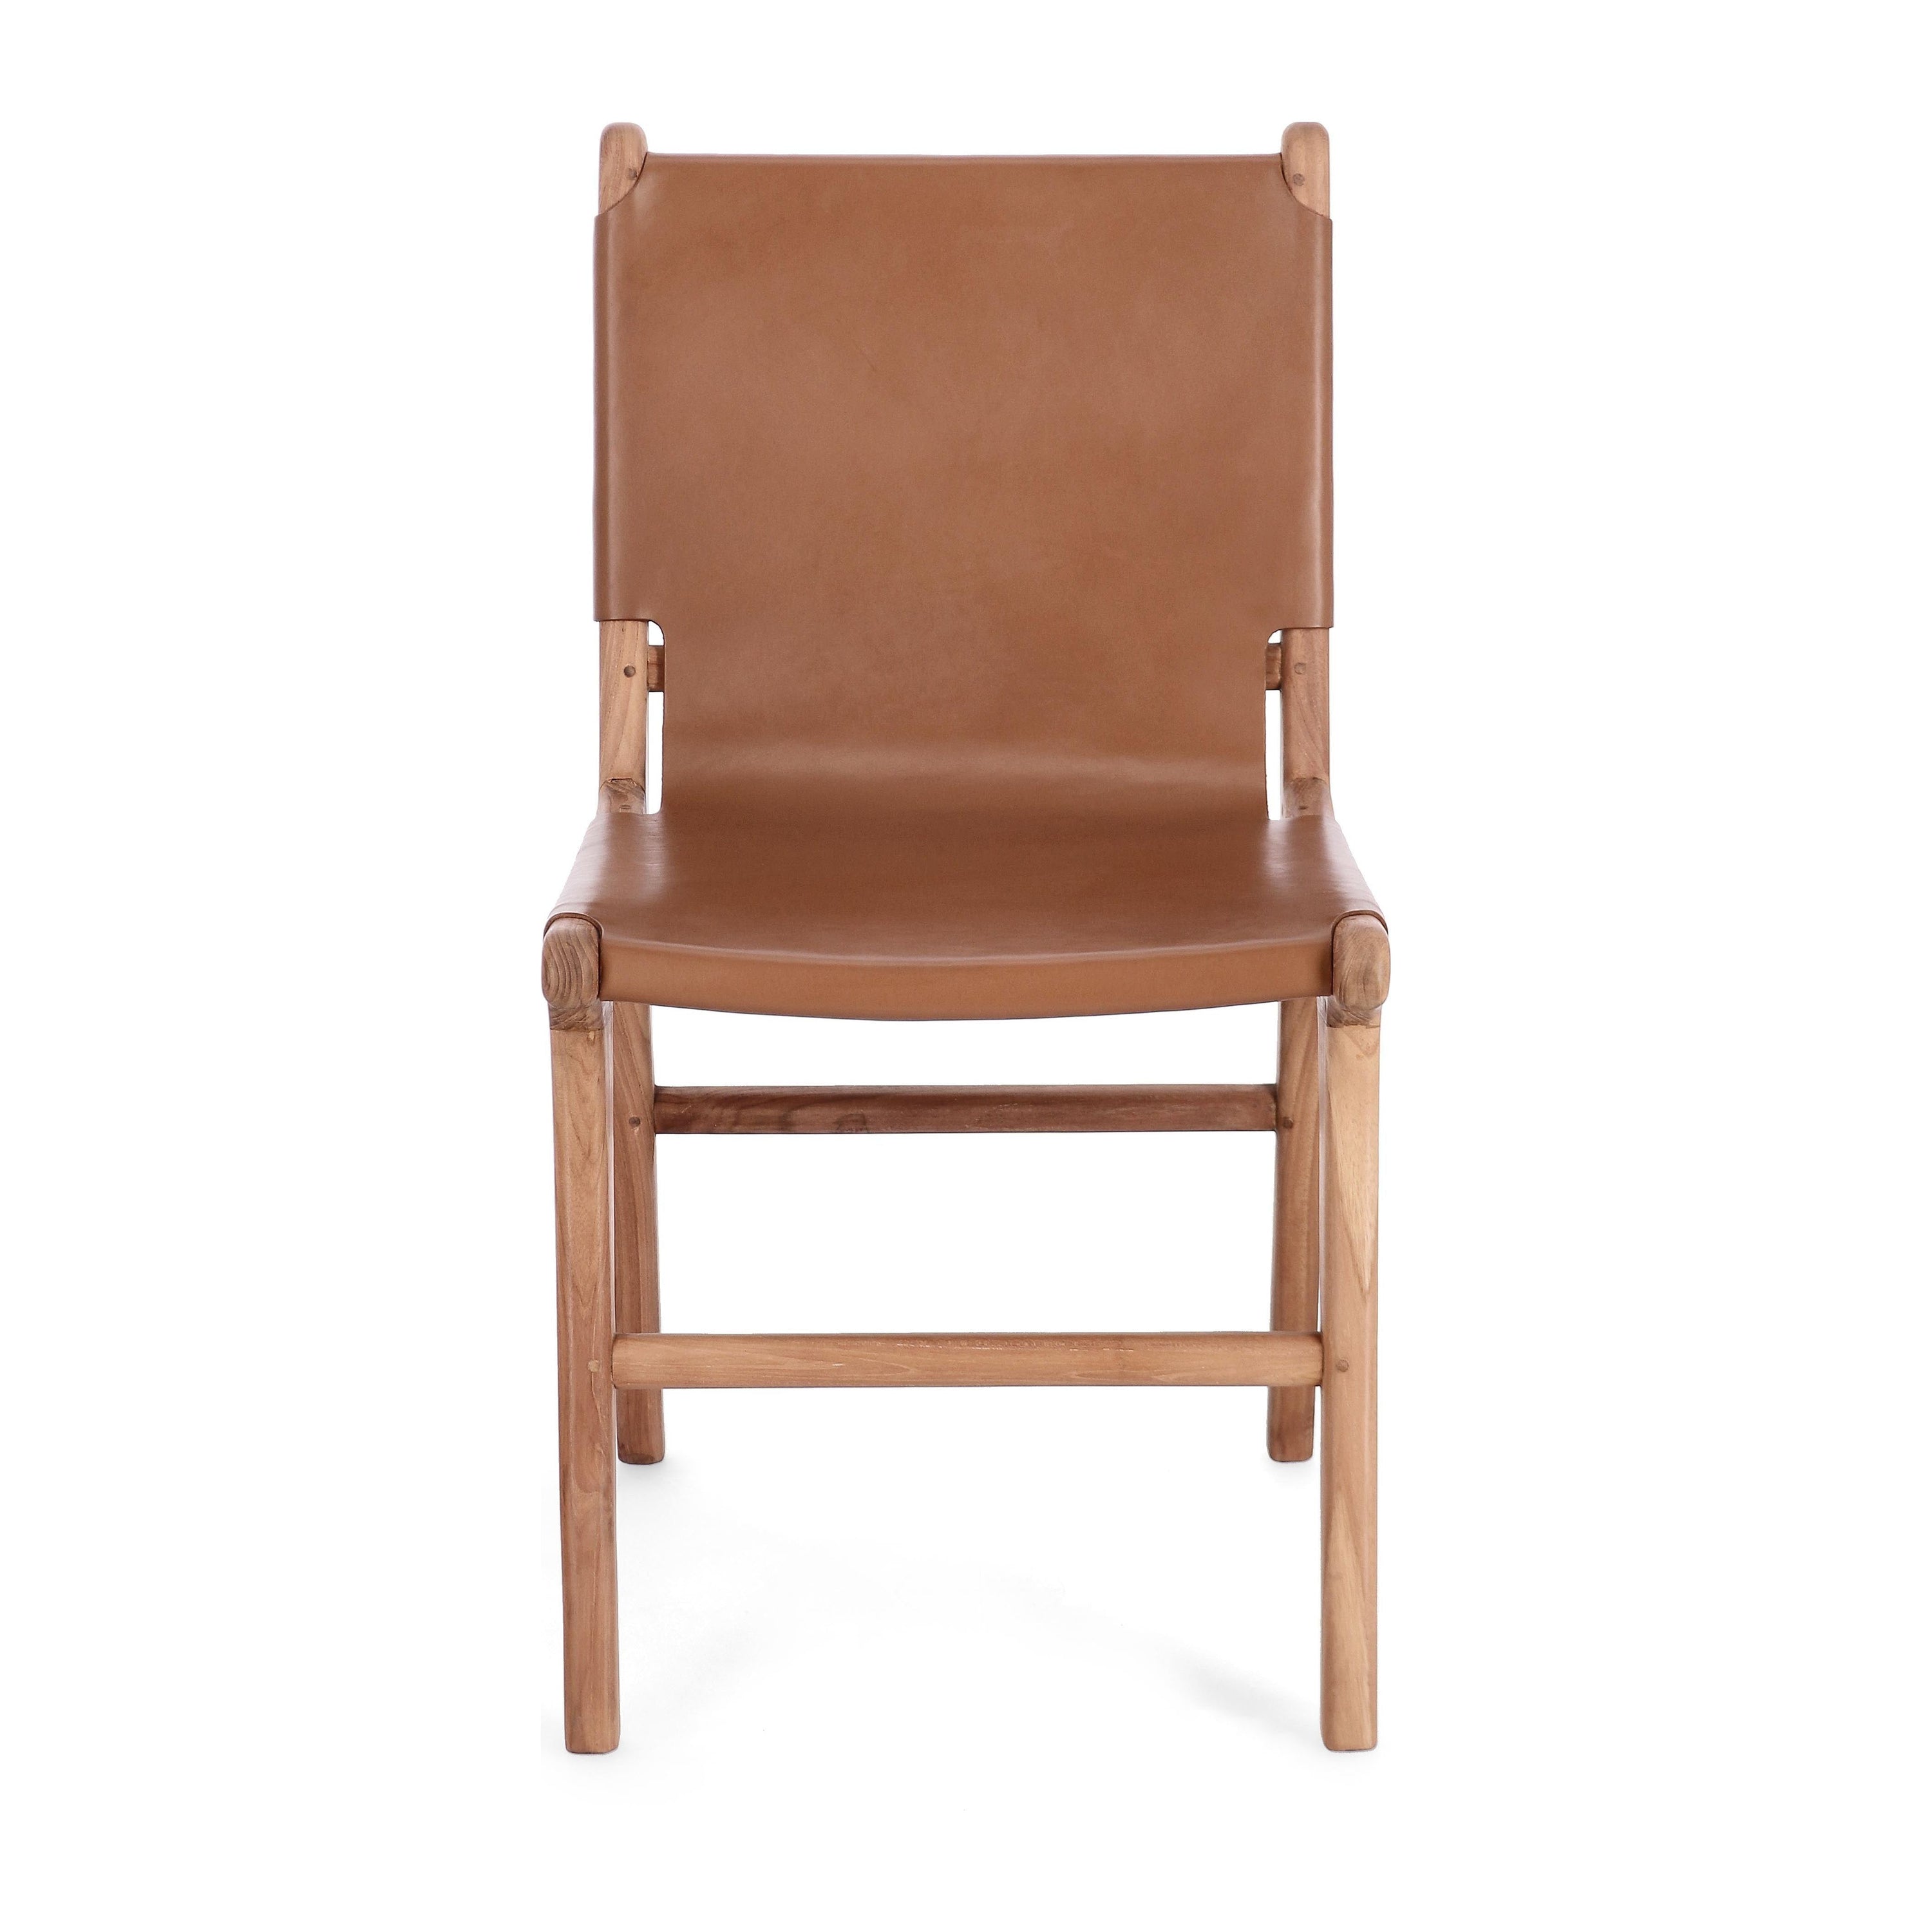 EUGENIE kėdė, konjako spalva